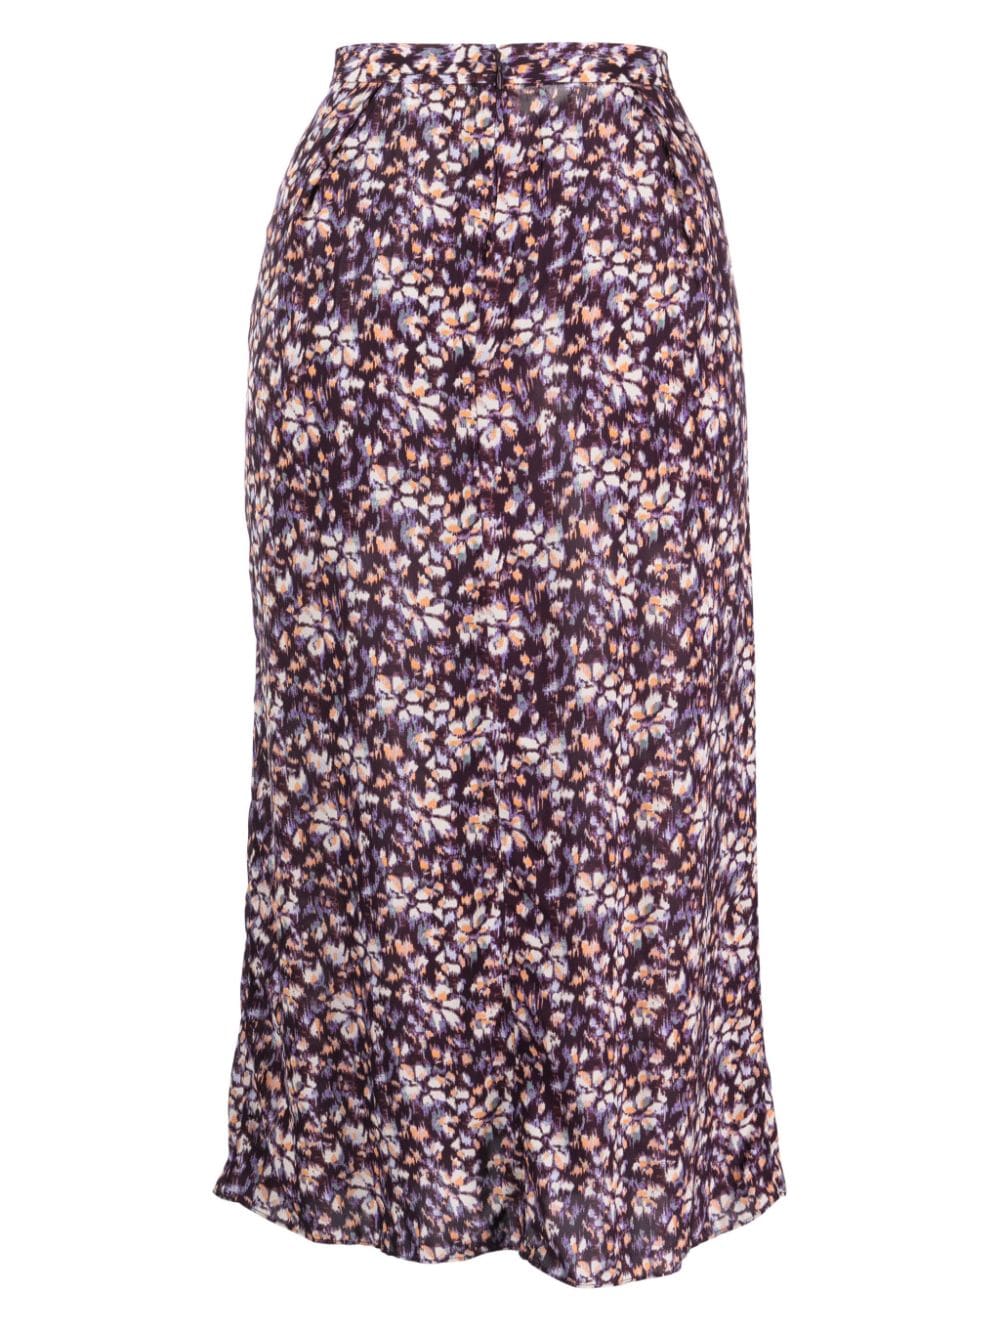 MARANT ÉTOILE Eolia floral-print skirt - Paars